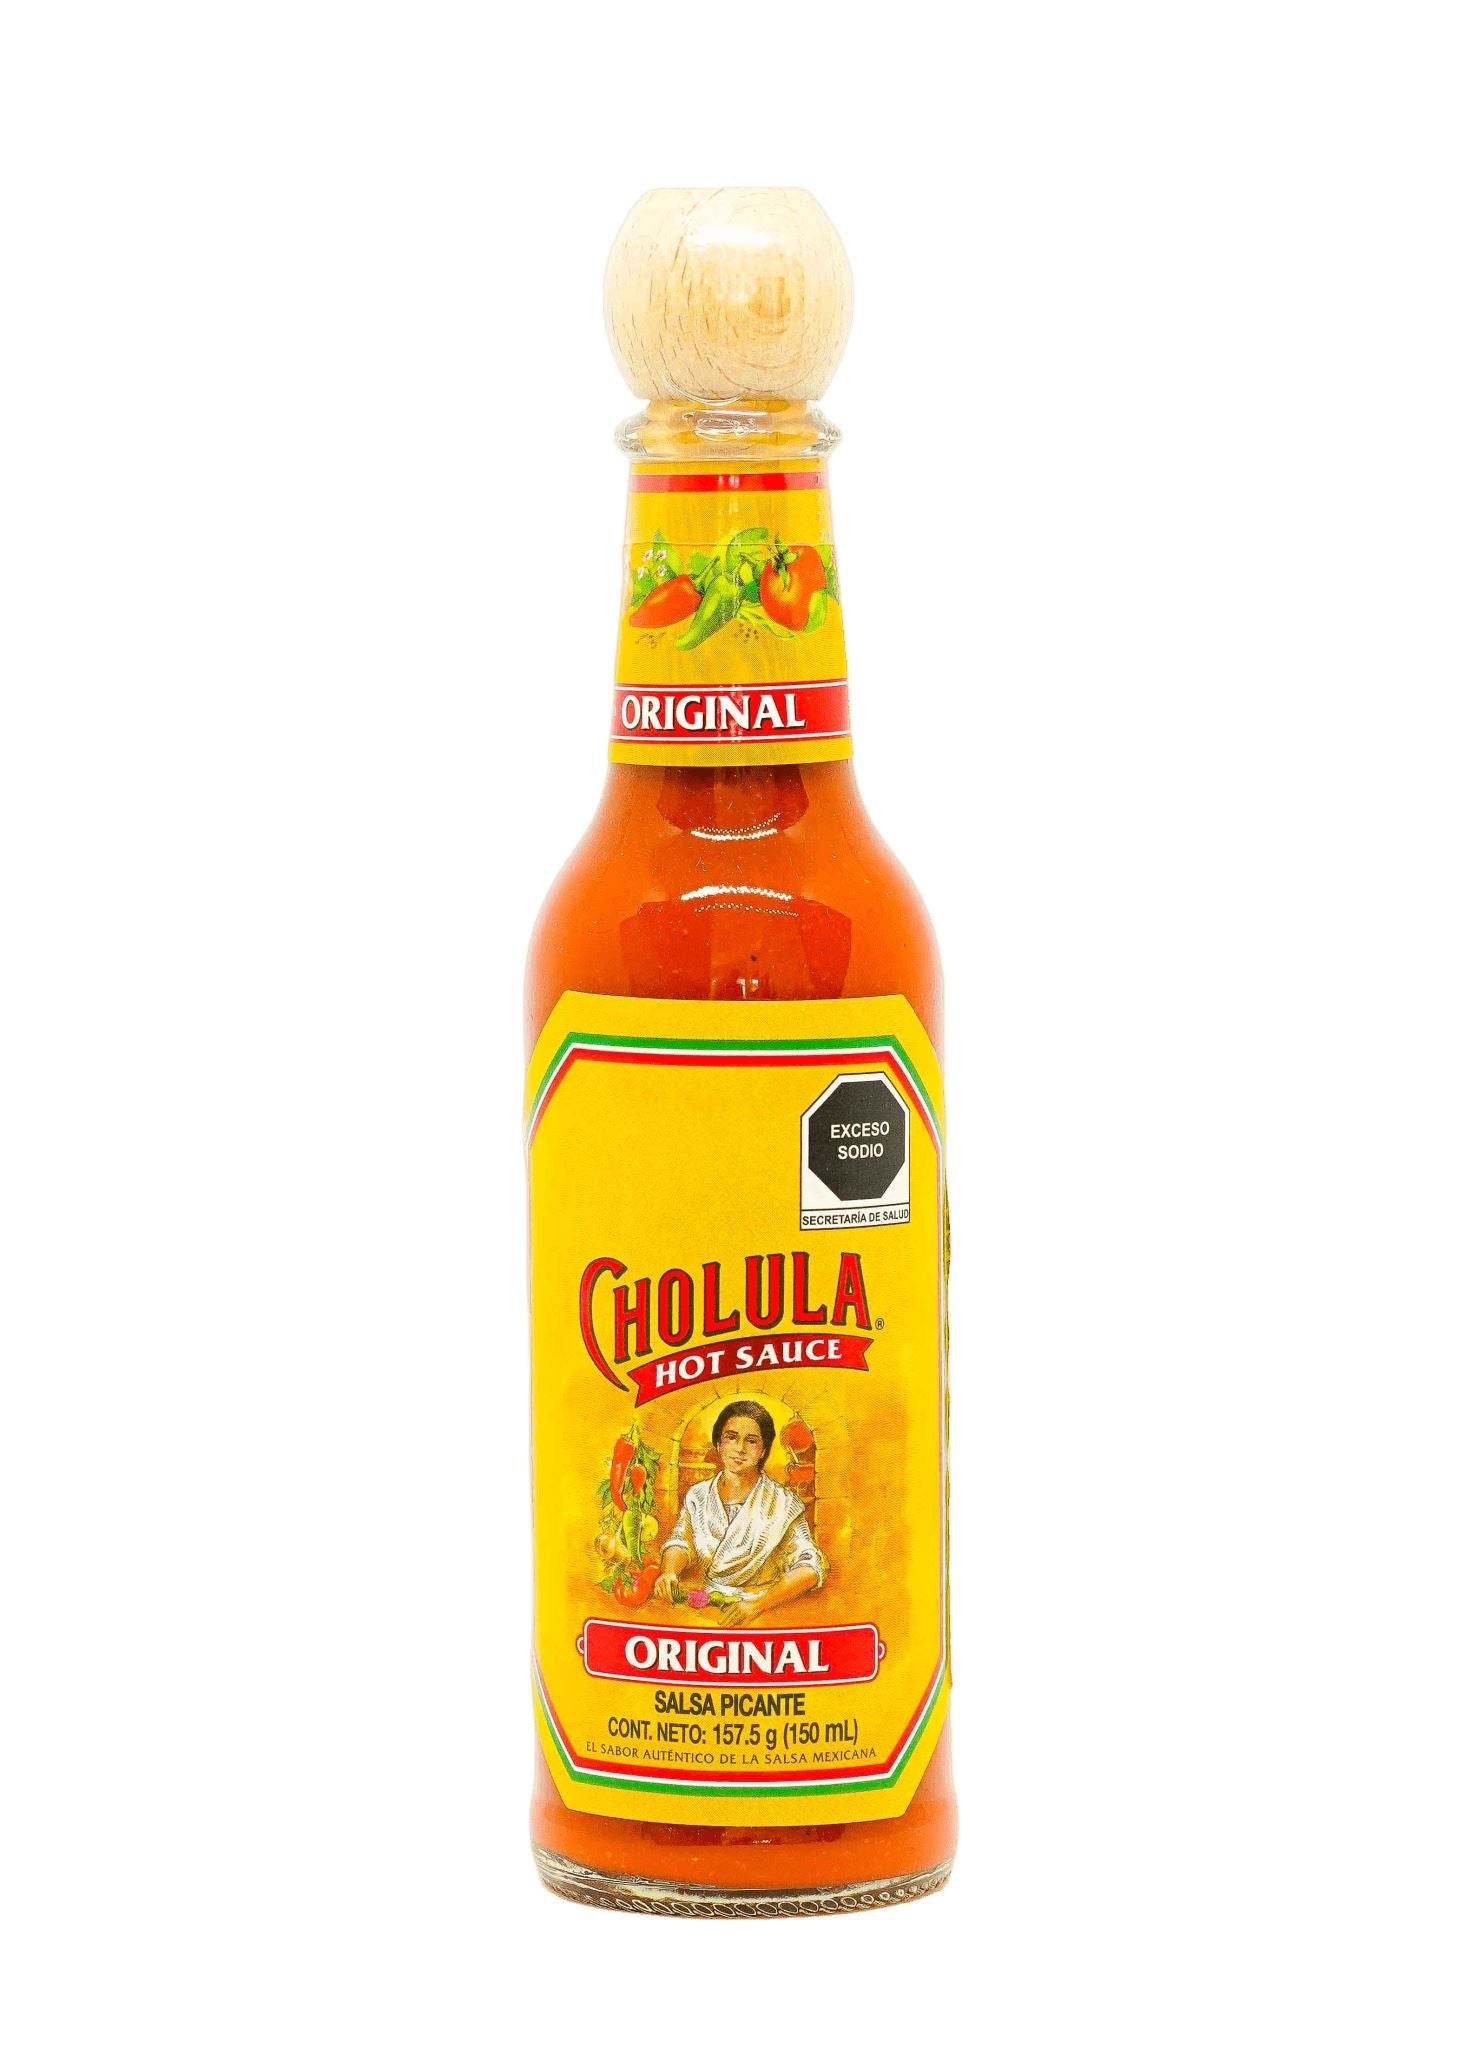 Cholula Original Hot Sauce 60ml / 150ml Sauces Casa Cuervo 150ml 